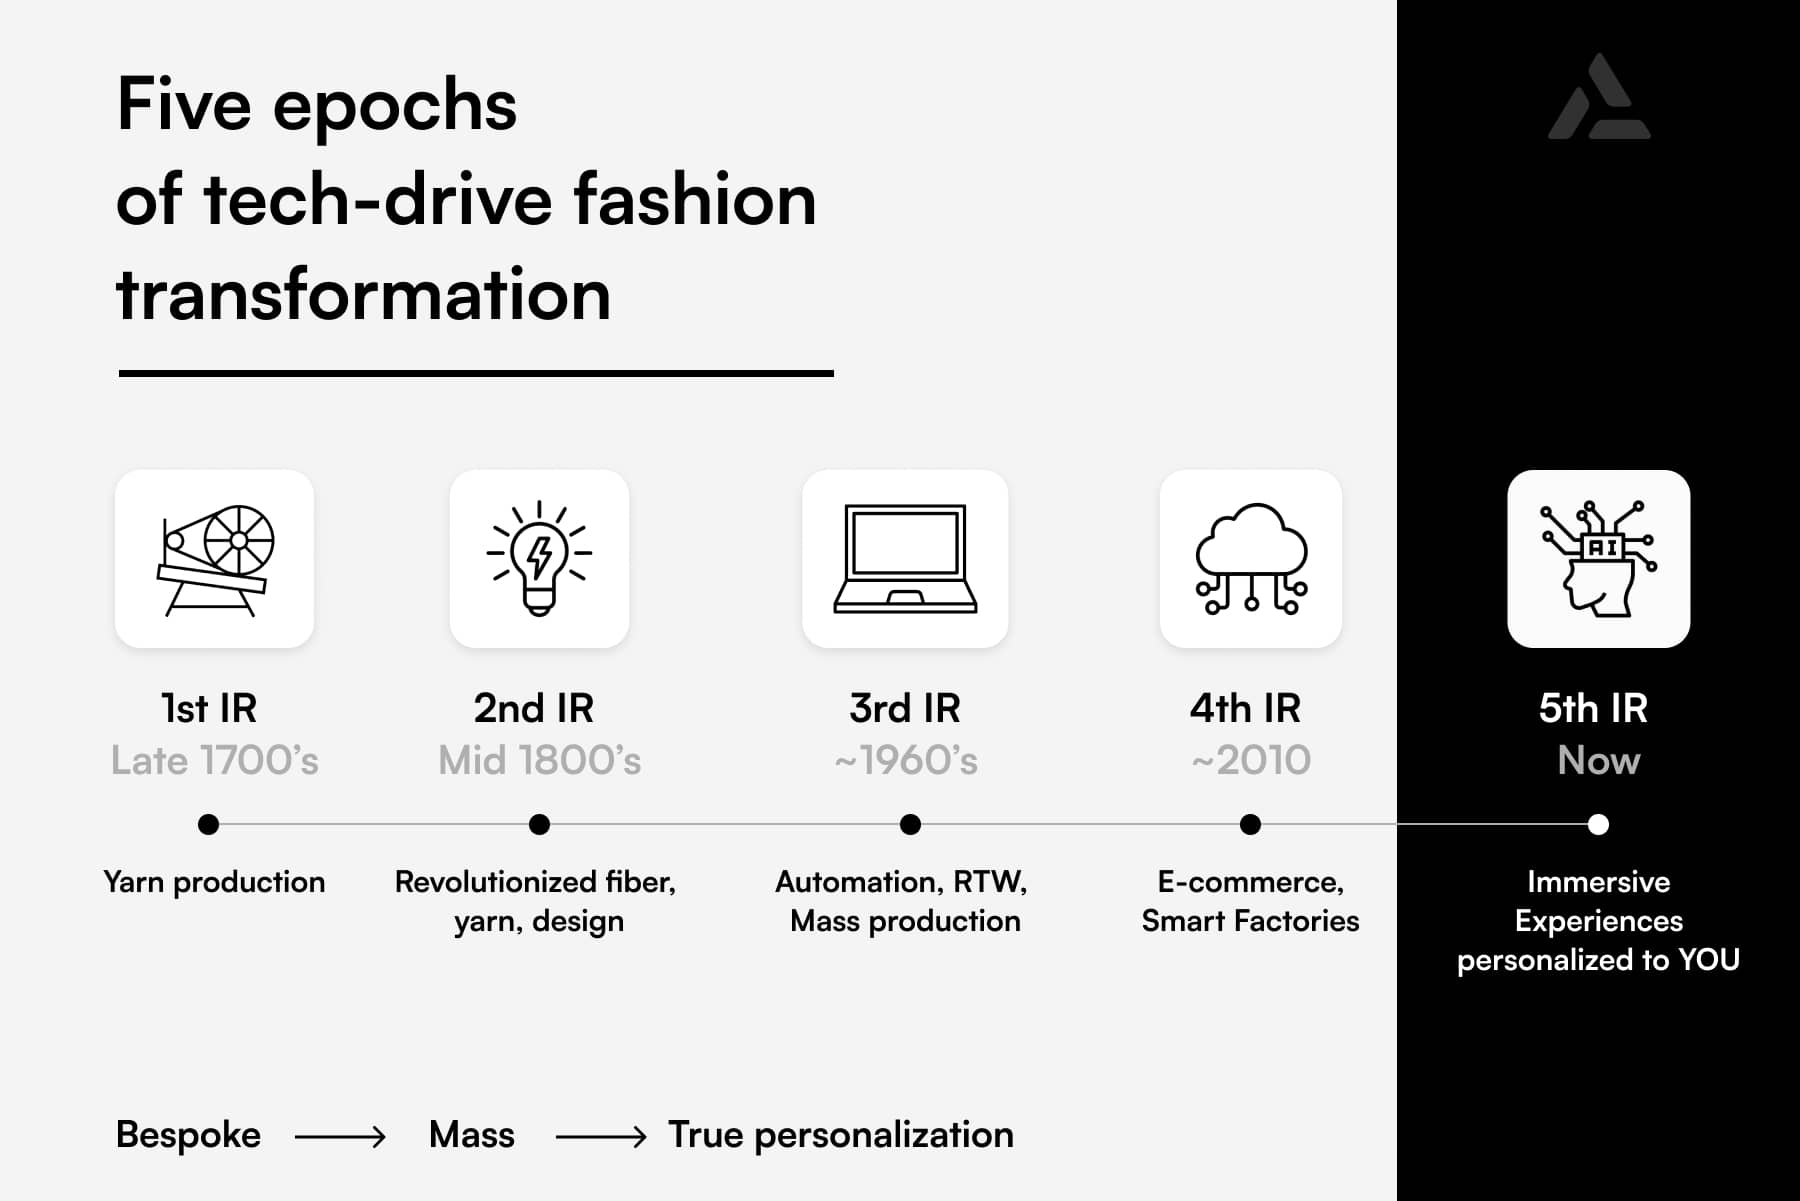 5 epochs of tech-drive fashion transformation